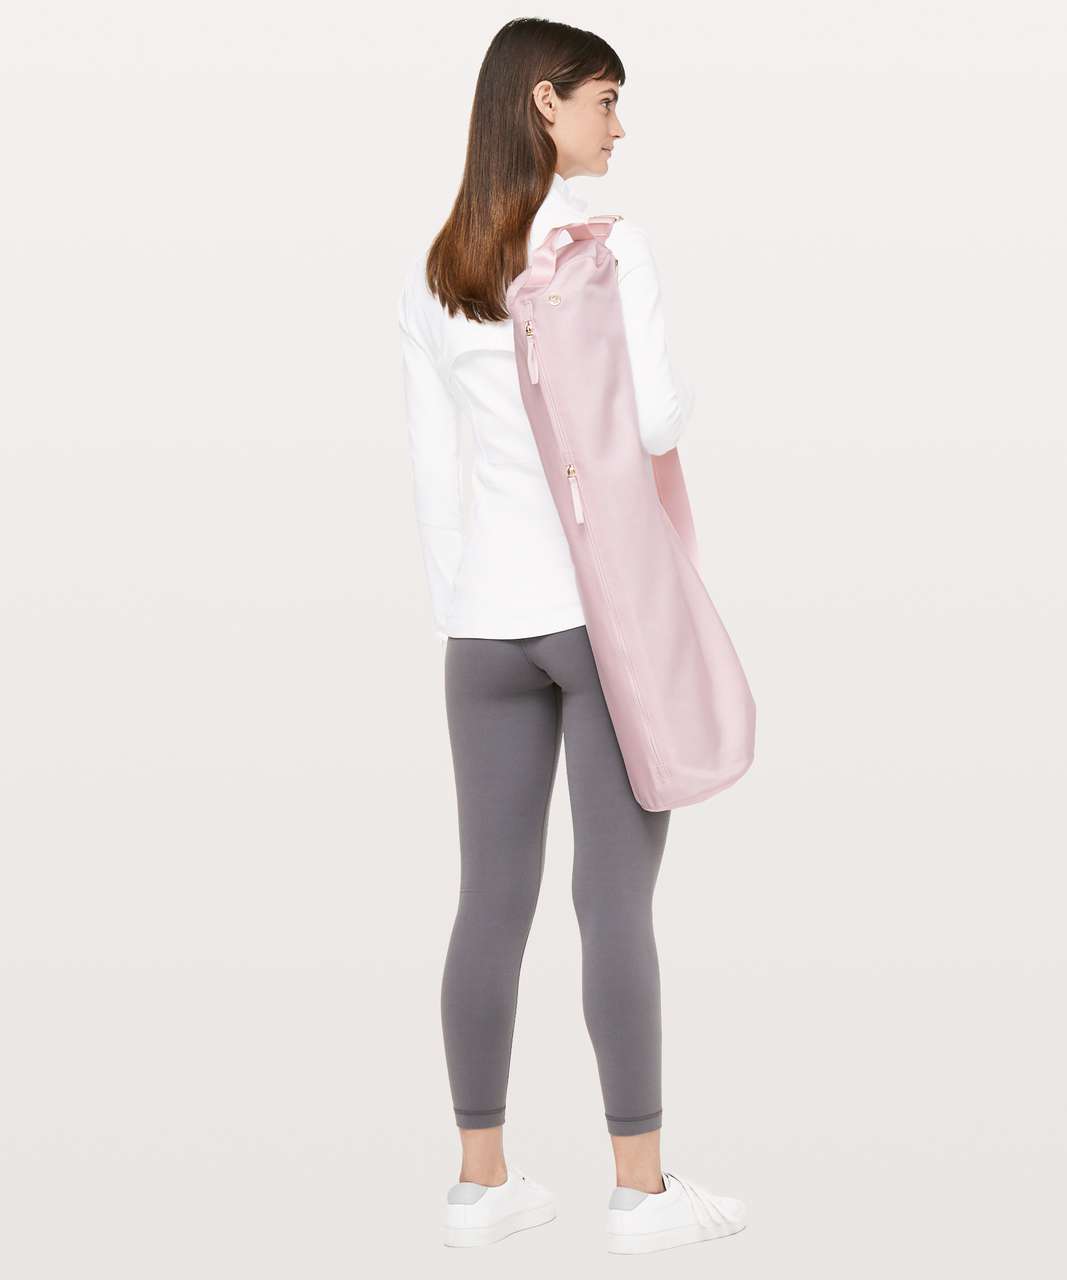 Pink Yoga Mat Bag - Pink Yoga bag - Pink Gym bag